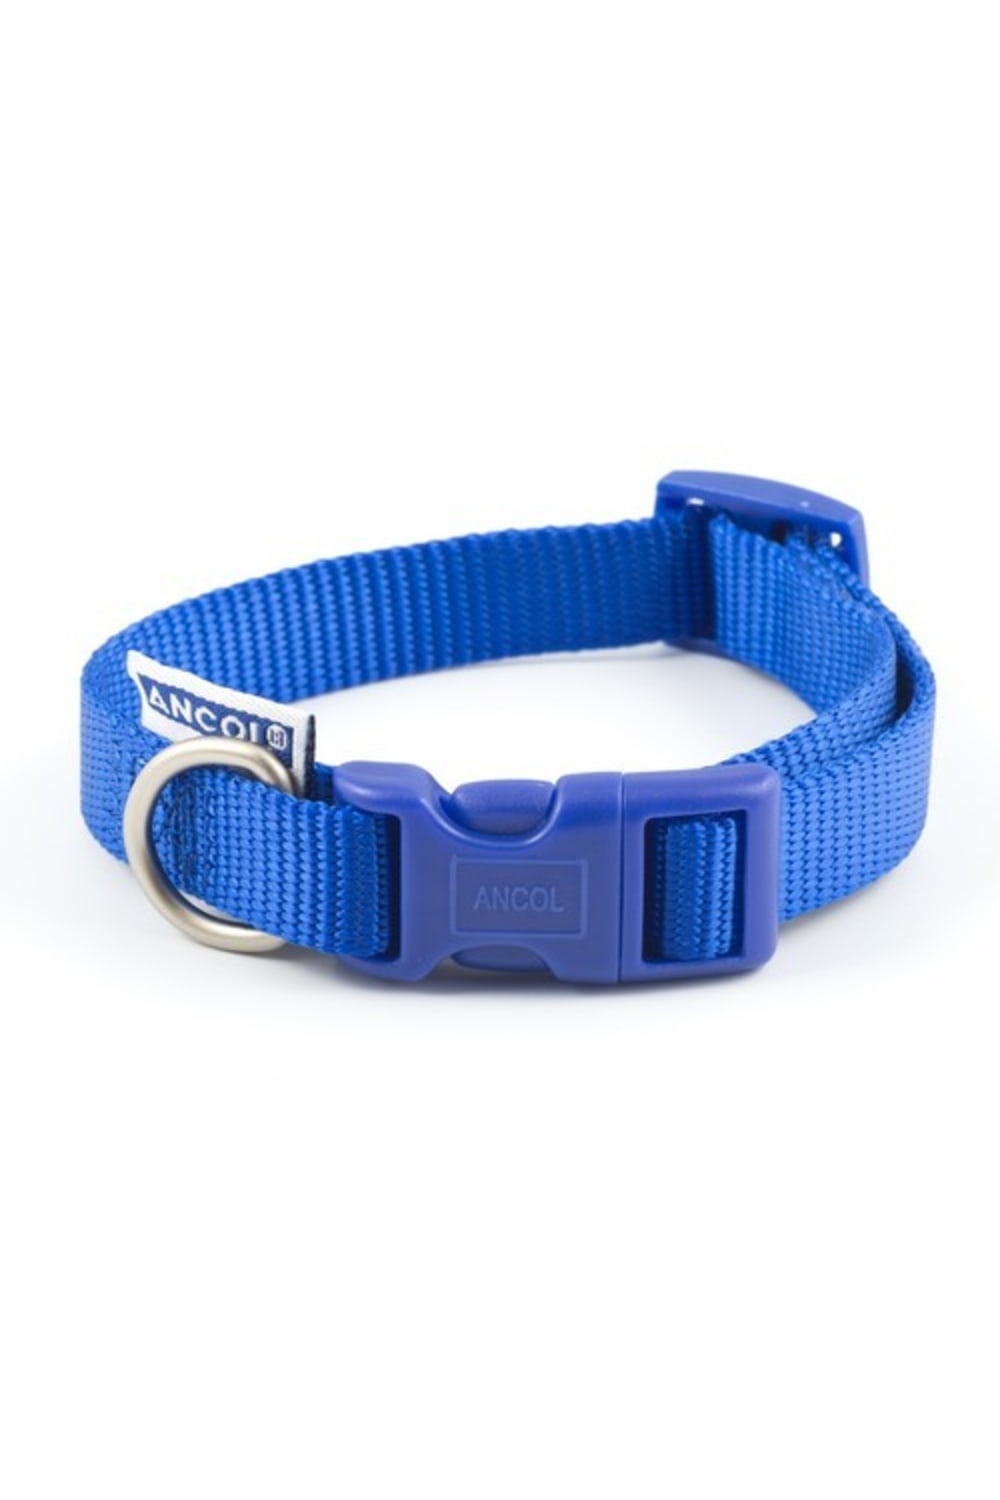 Ancol Nylon Adjustable Collar (Blue) (11x20in)